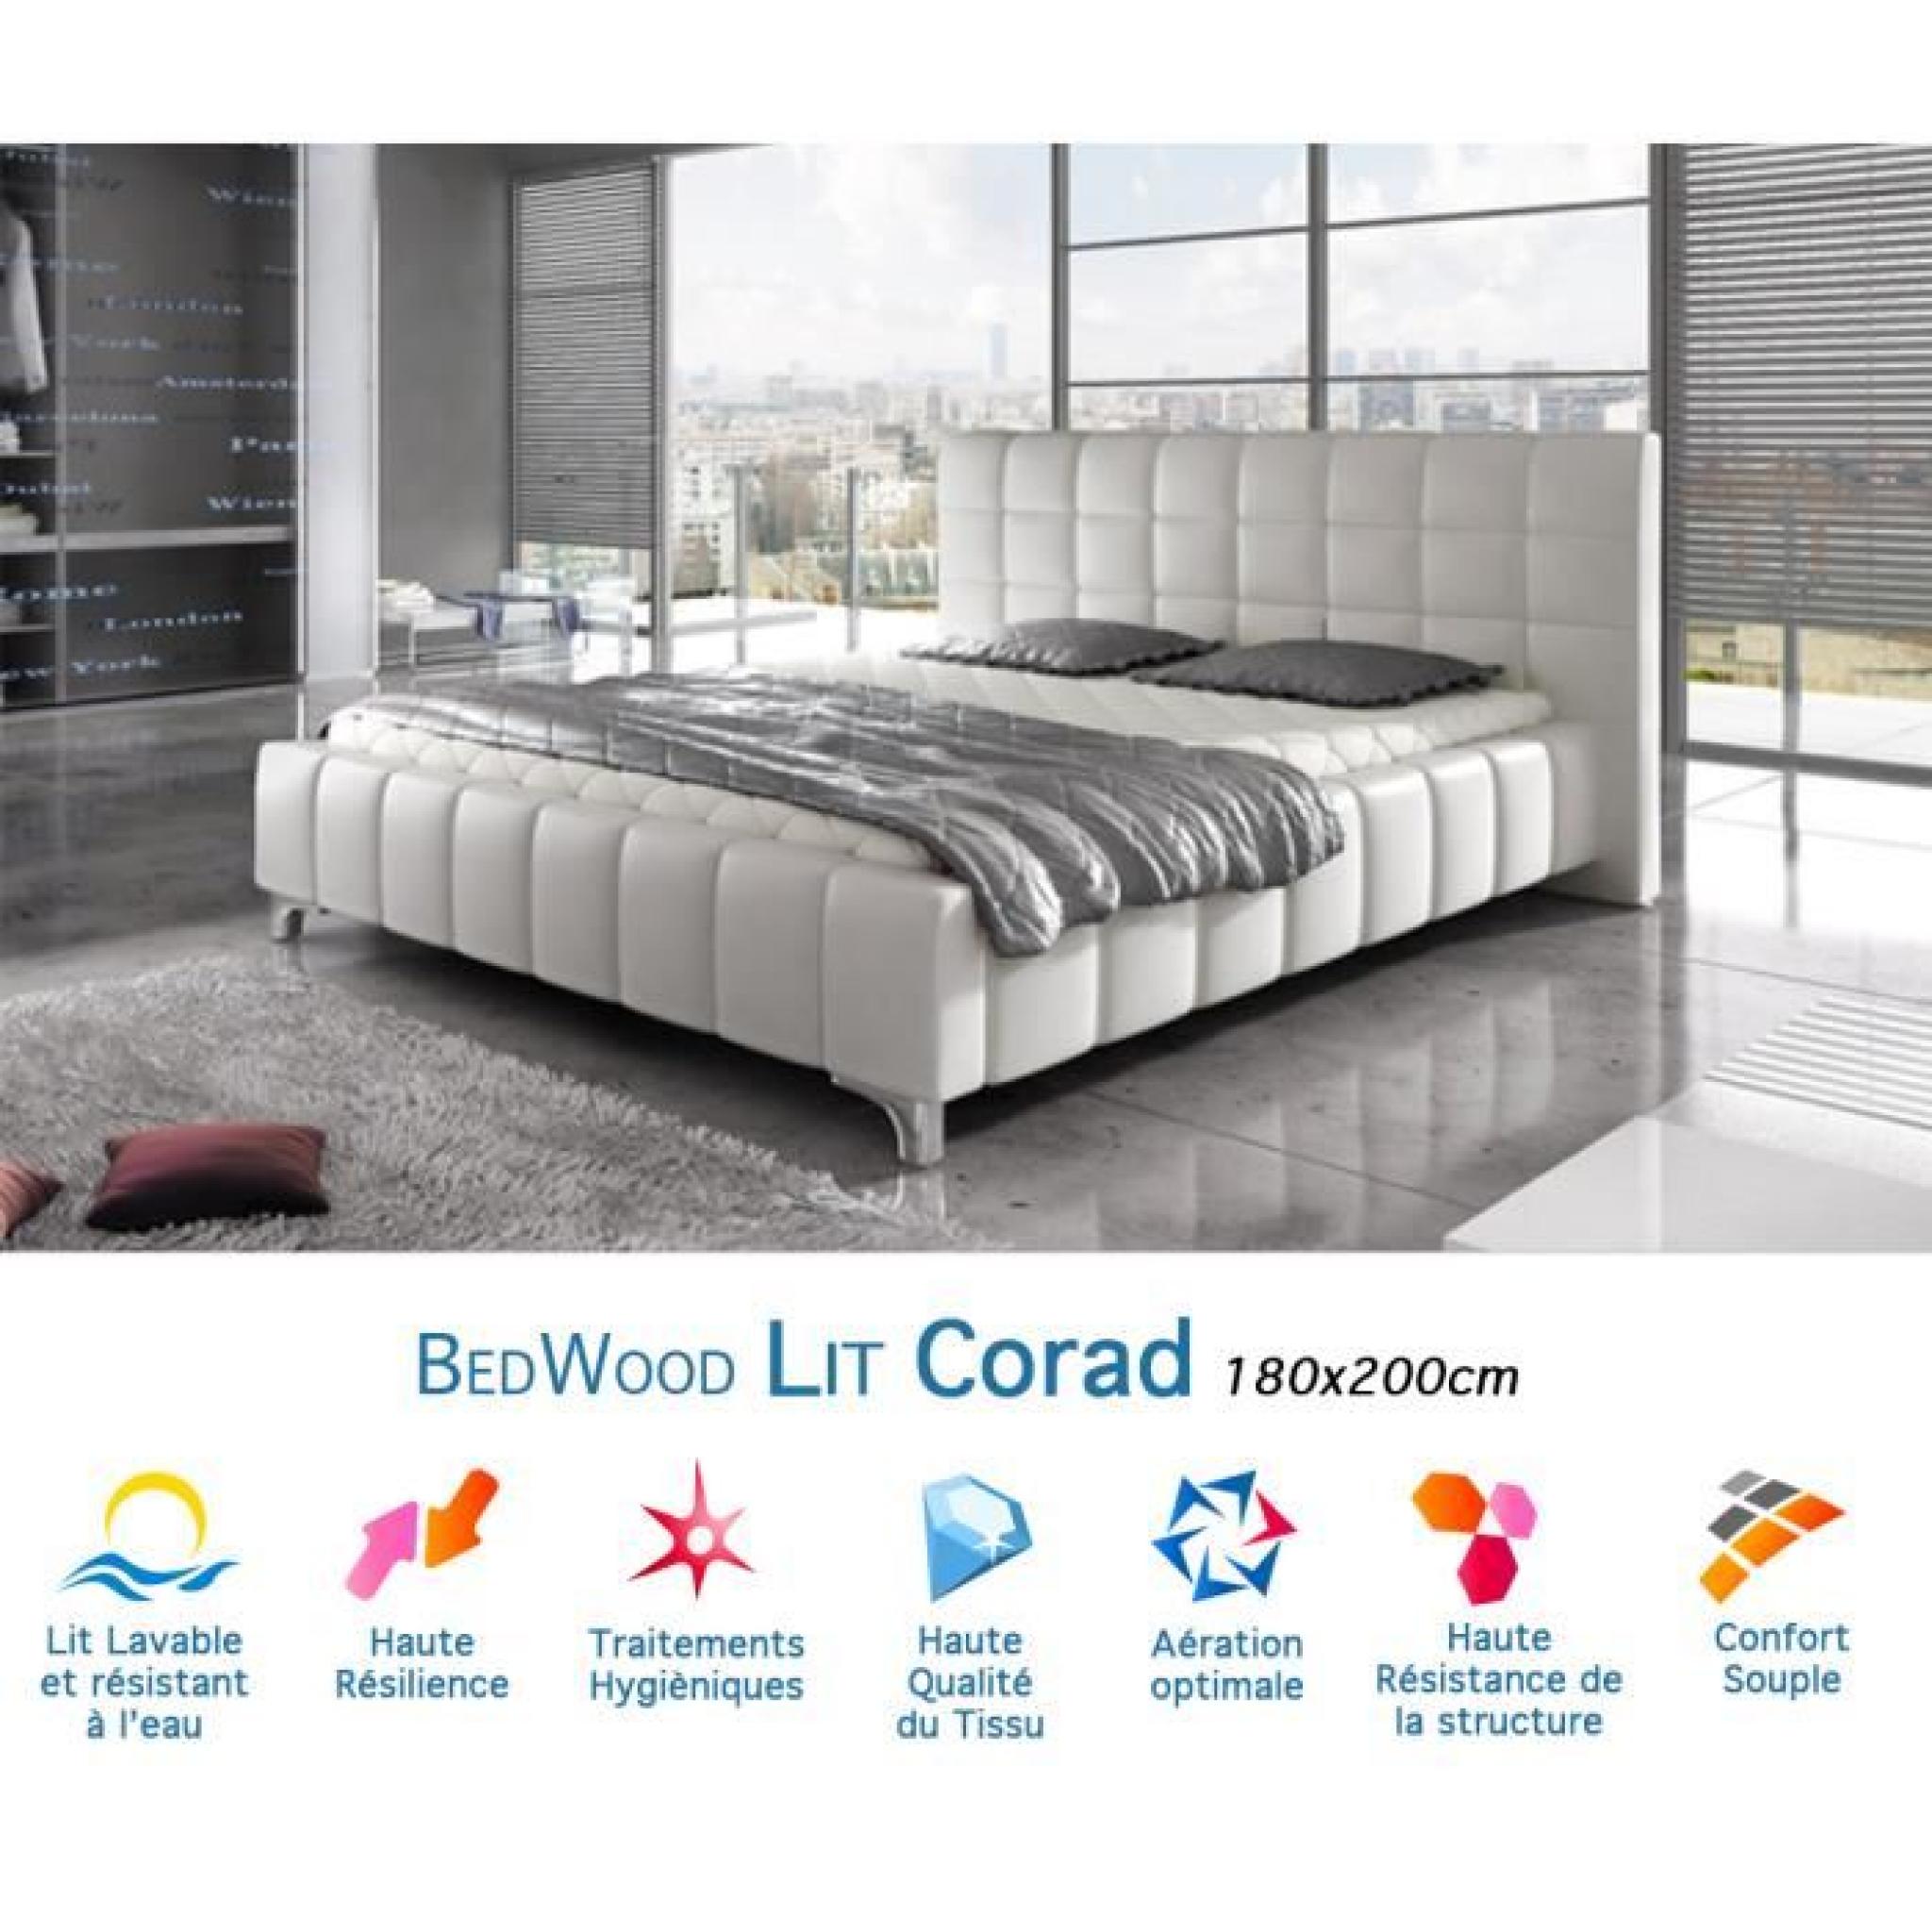 Lit Design Bedwood Corad 180x200cm